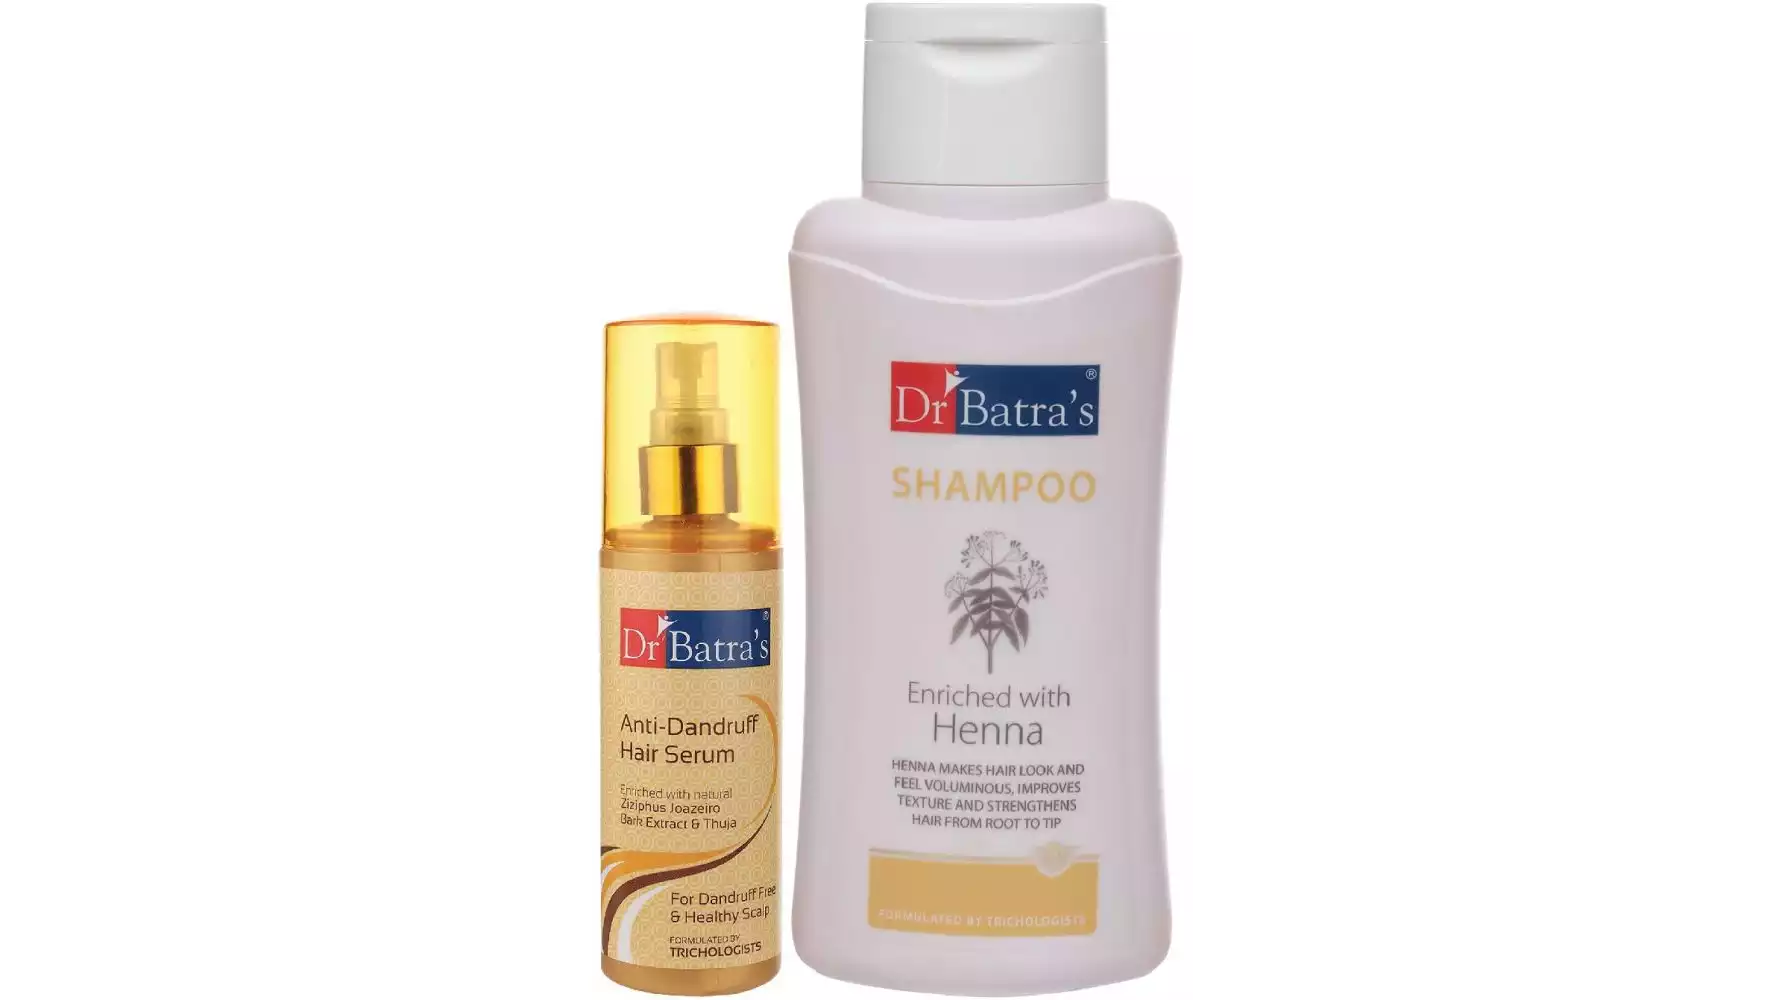 Dr Batras Anti Dandruff Hair Serum And Normal Shampoo Combo (125ML+500ML) (1Pack)